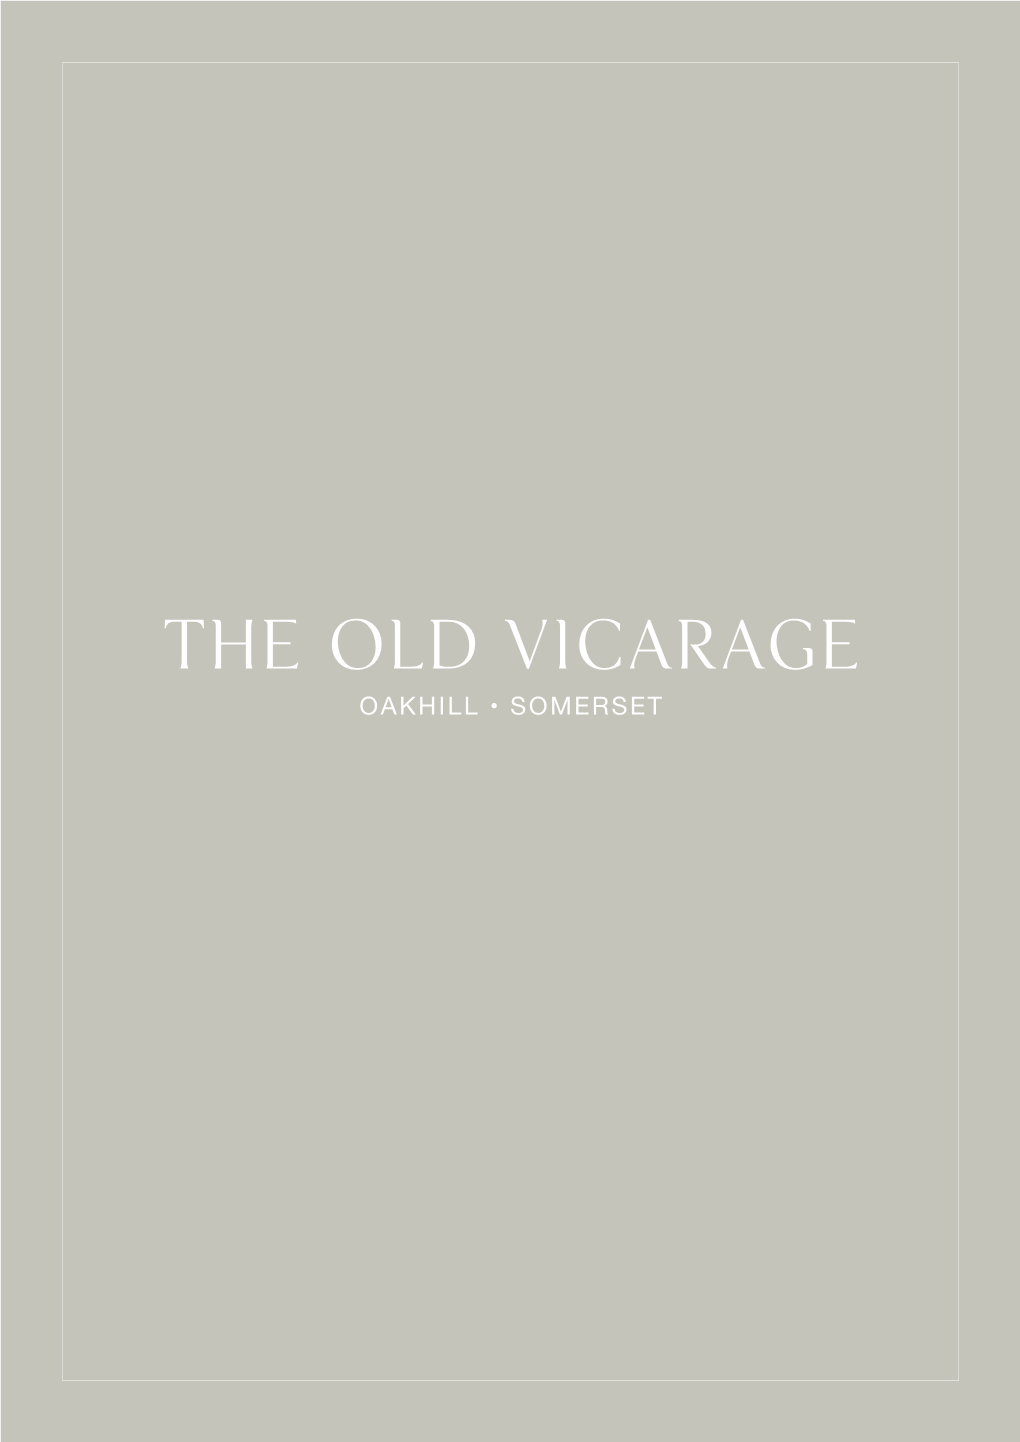 The Old Vicarage Oakhill • Somerset